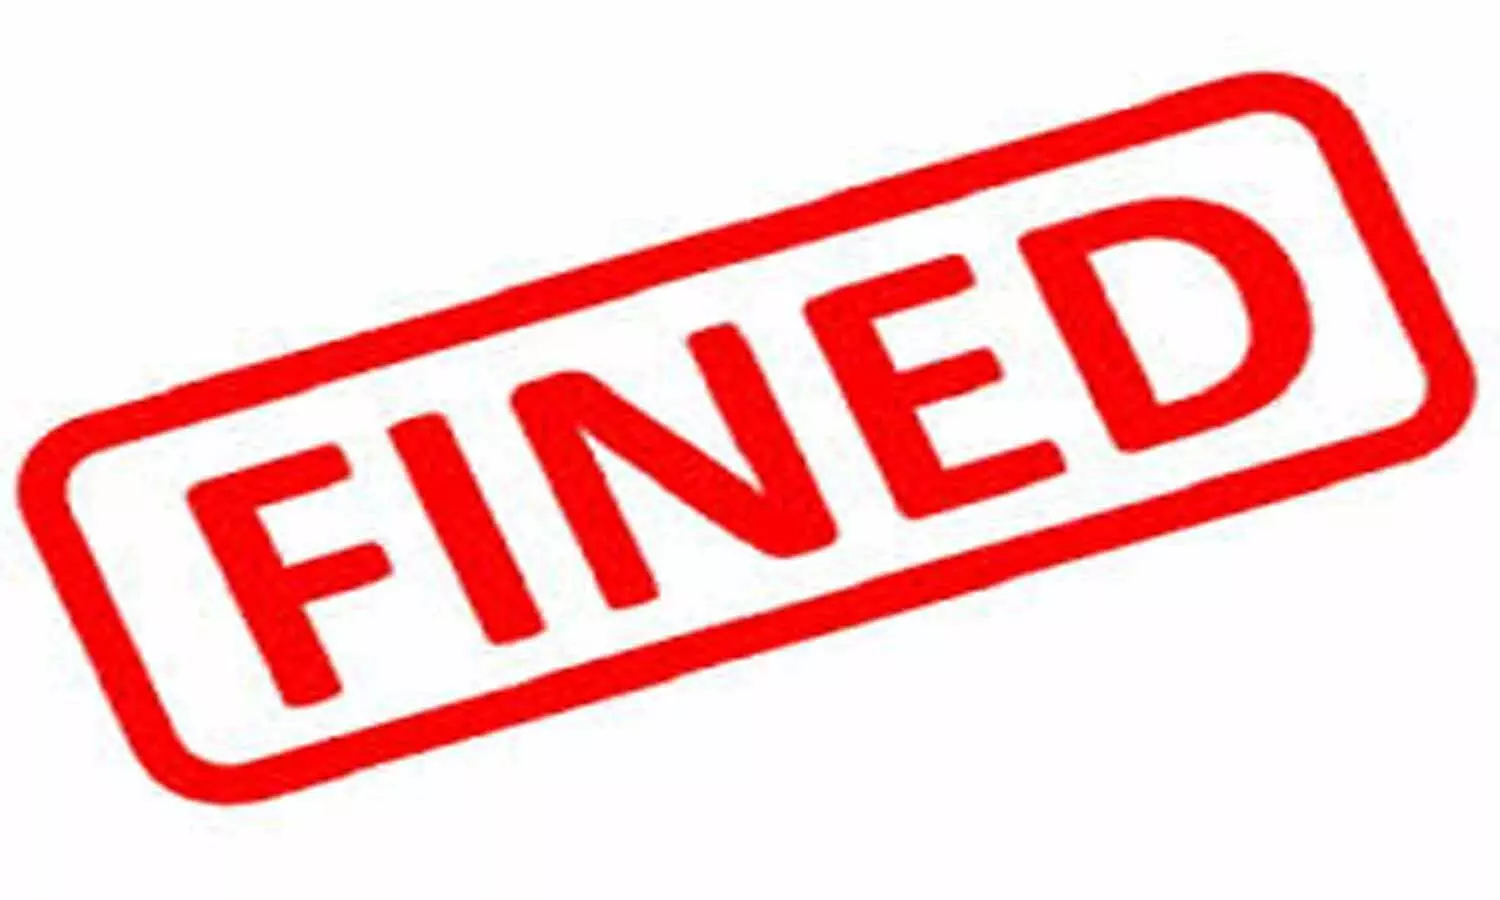 40 Karnataka labs slapped Rs 20 lakh fine for delay in uploading COVID test results